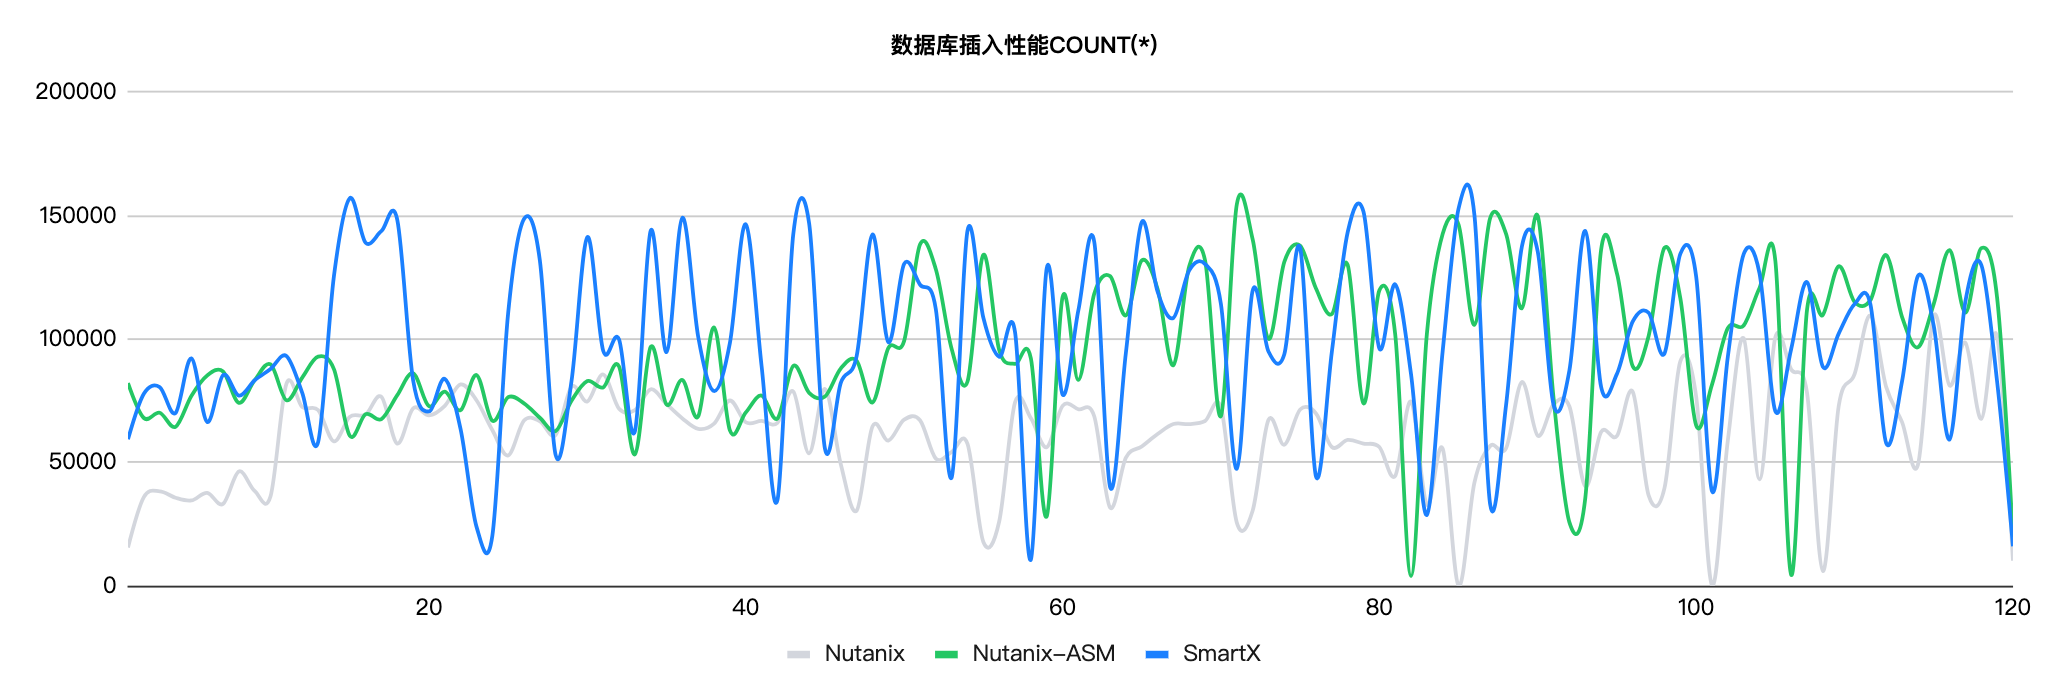 smartx-vs-nutanix-databae-11.png